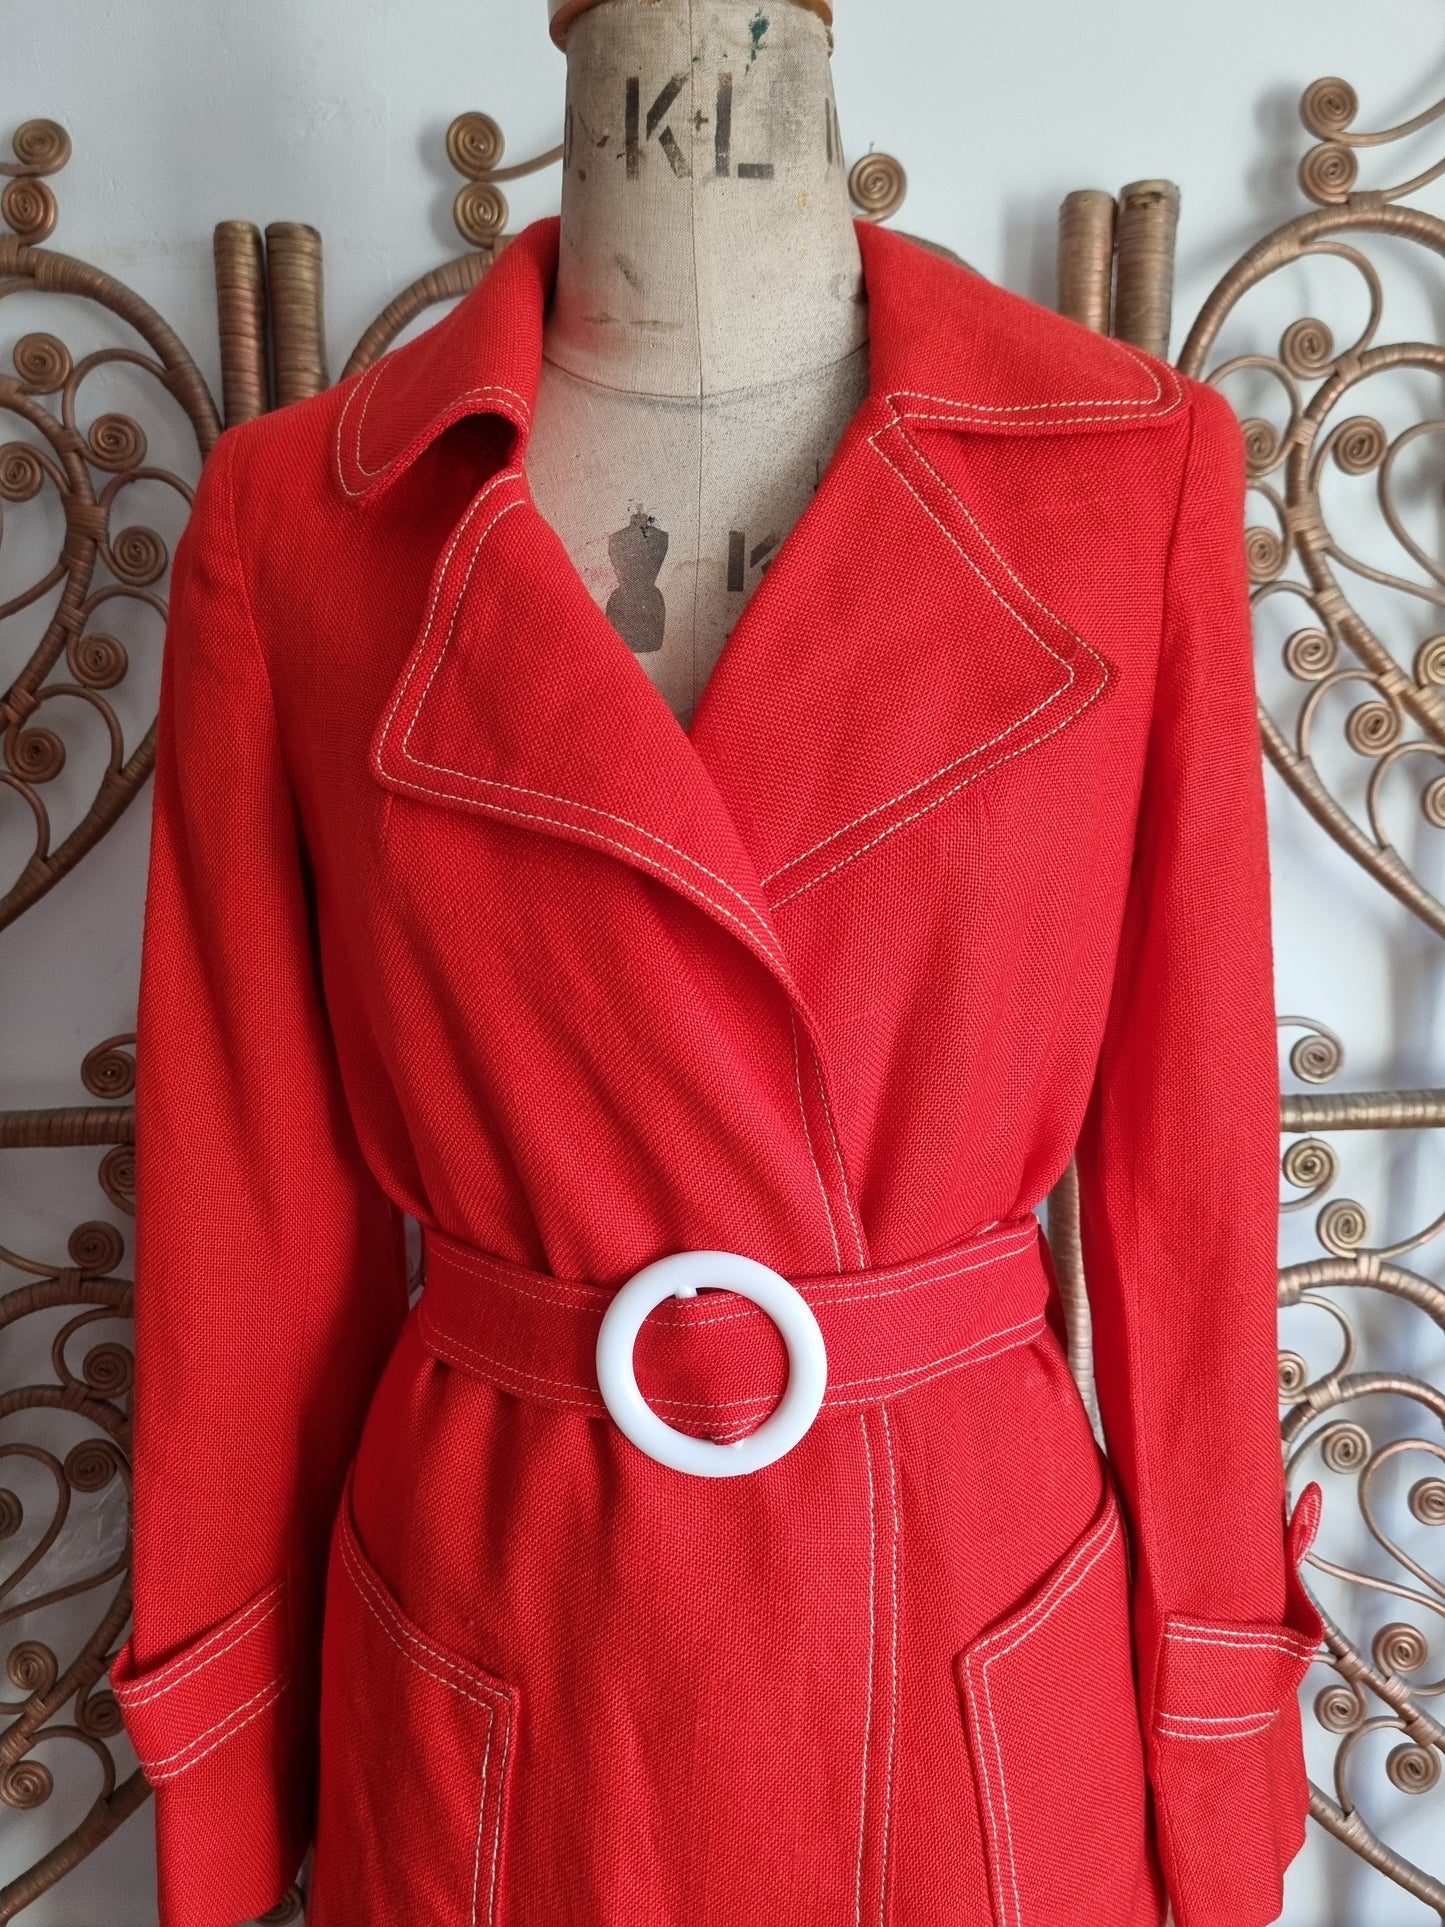 Vintage red 60s jacket